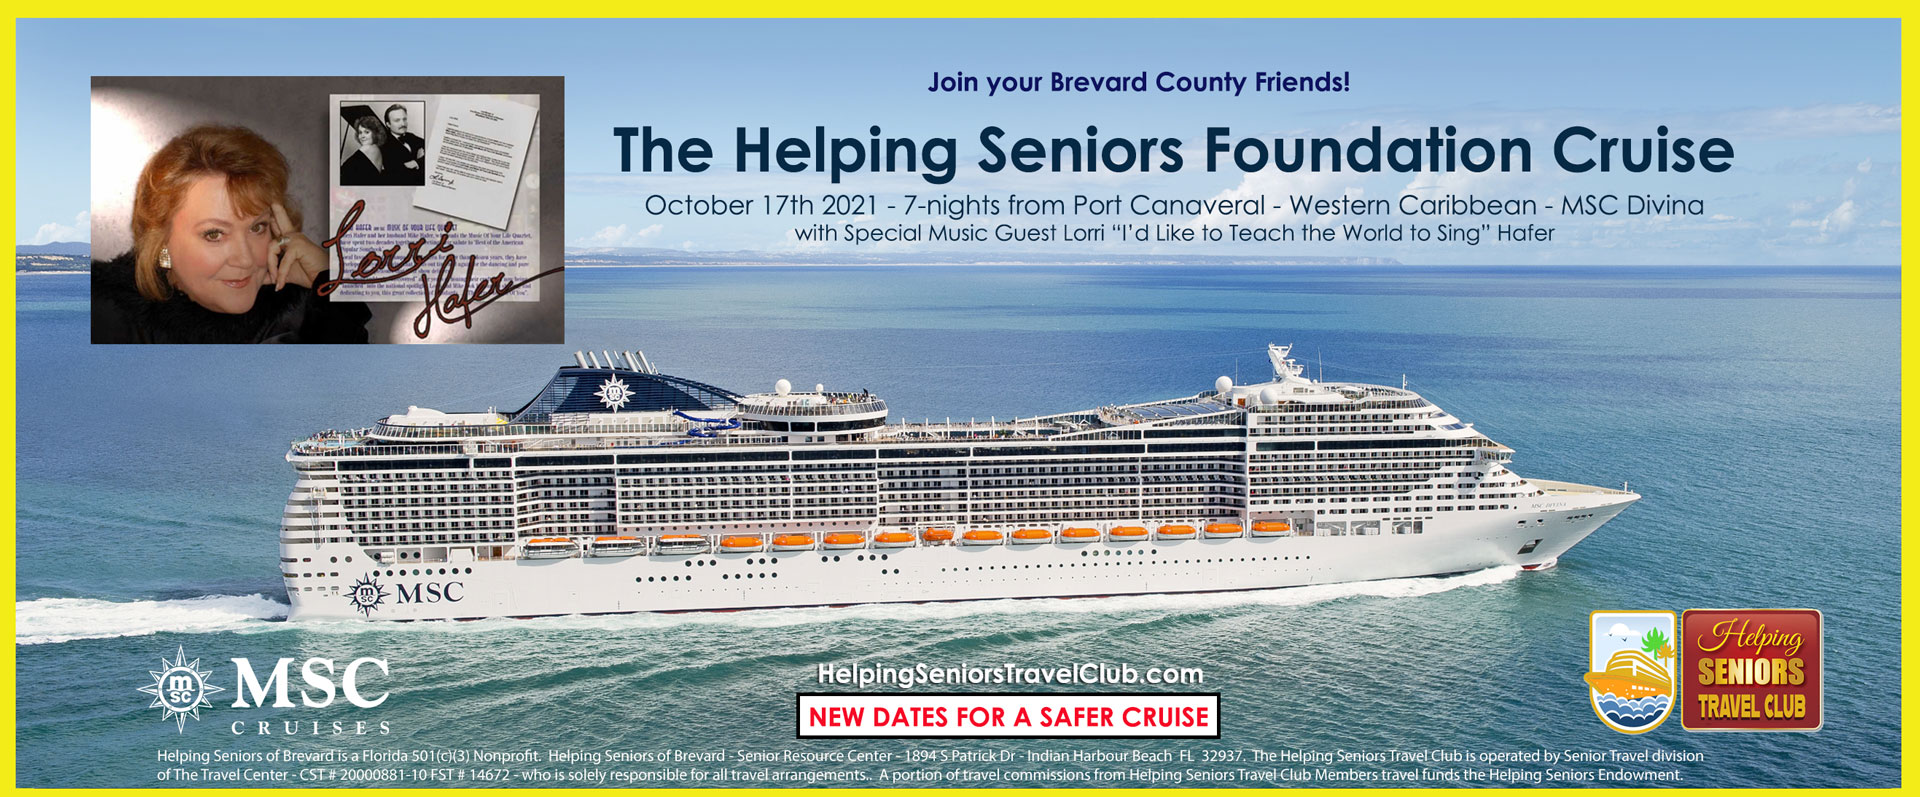 Helping Seniors Travel Club Cruise